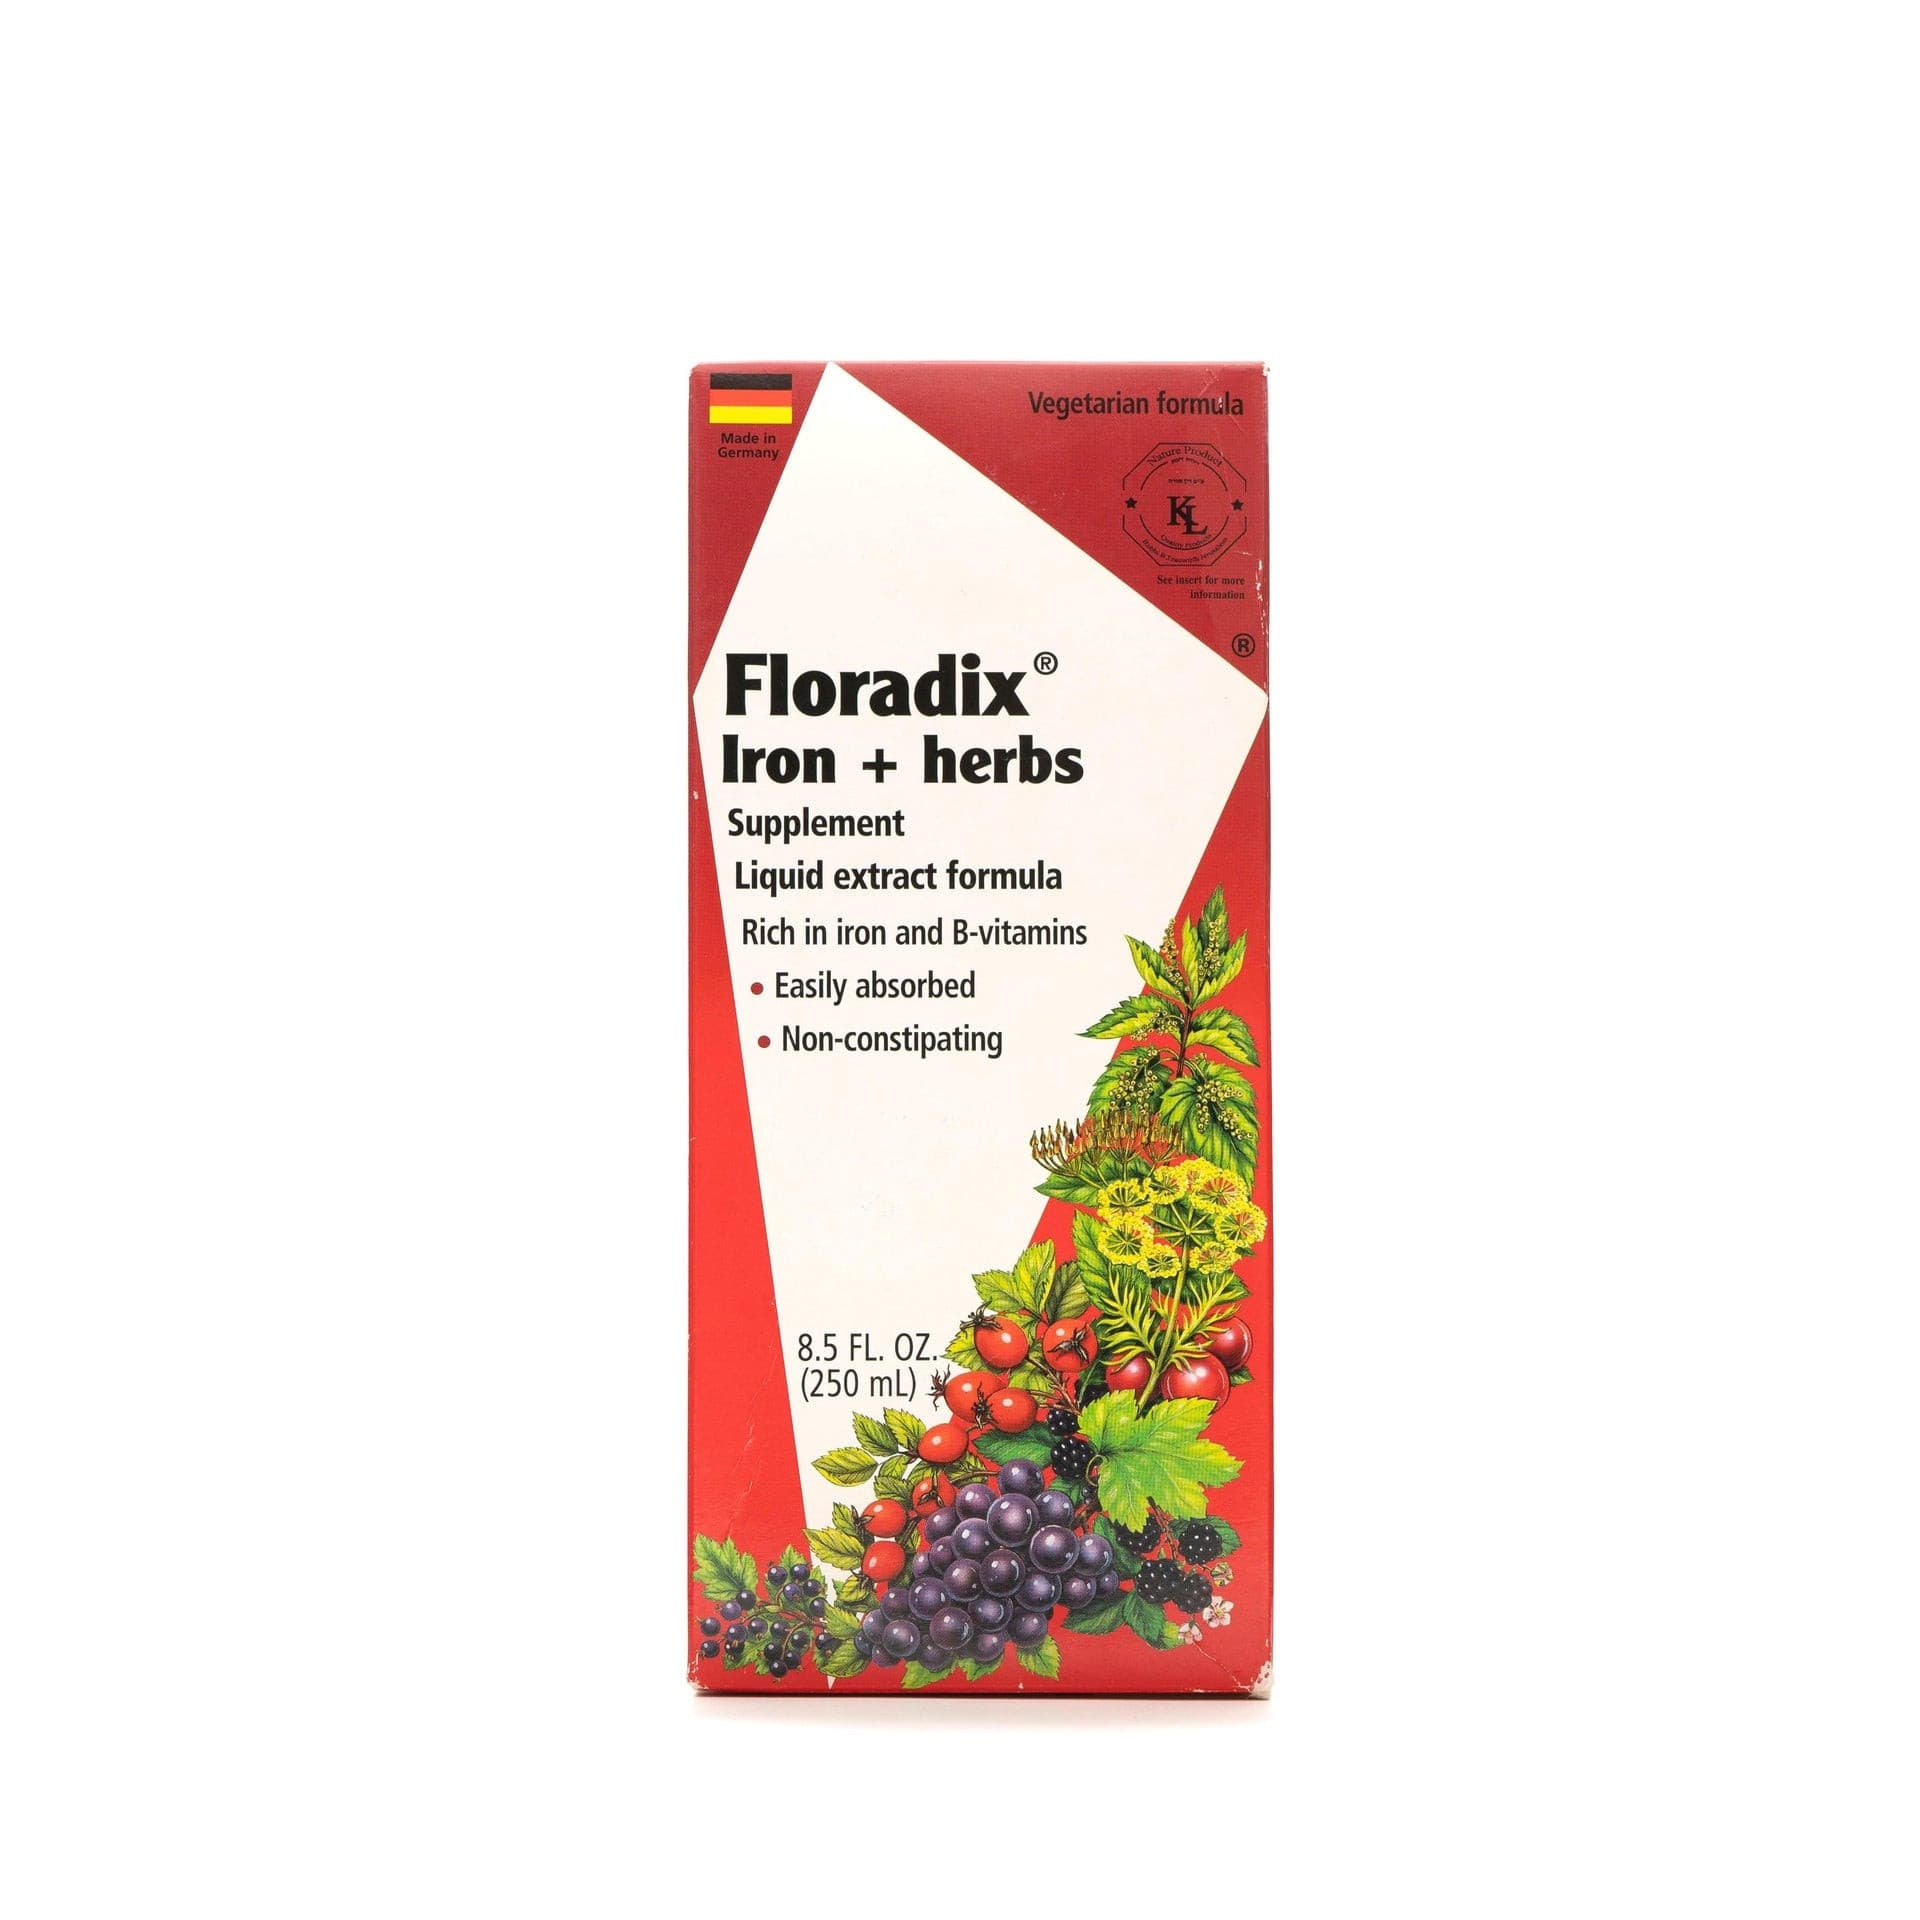 Flordix Iron + Herbs.